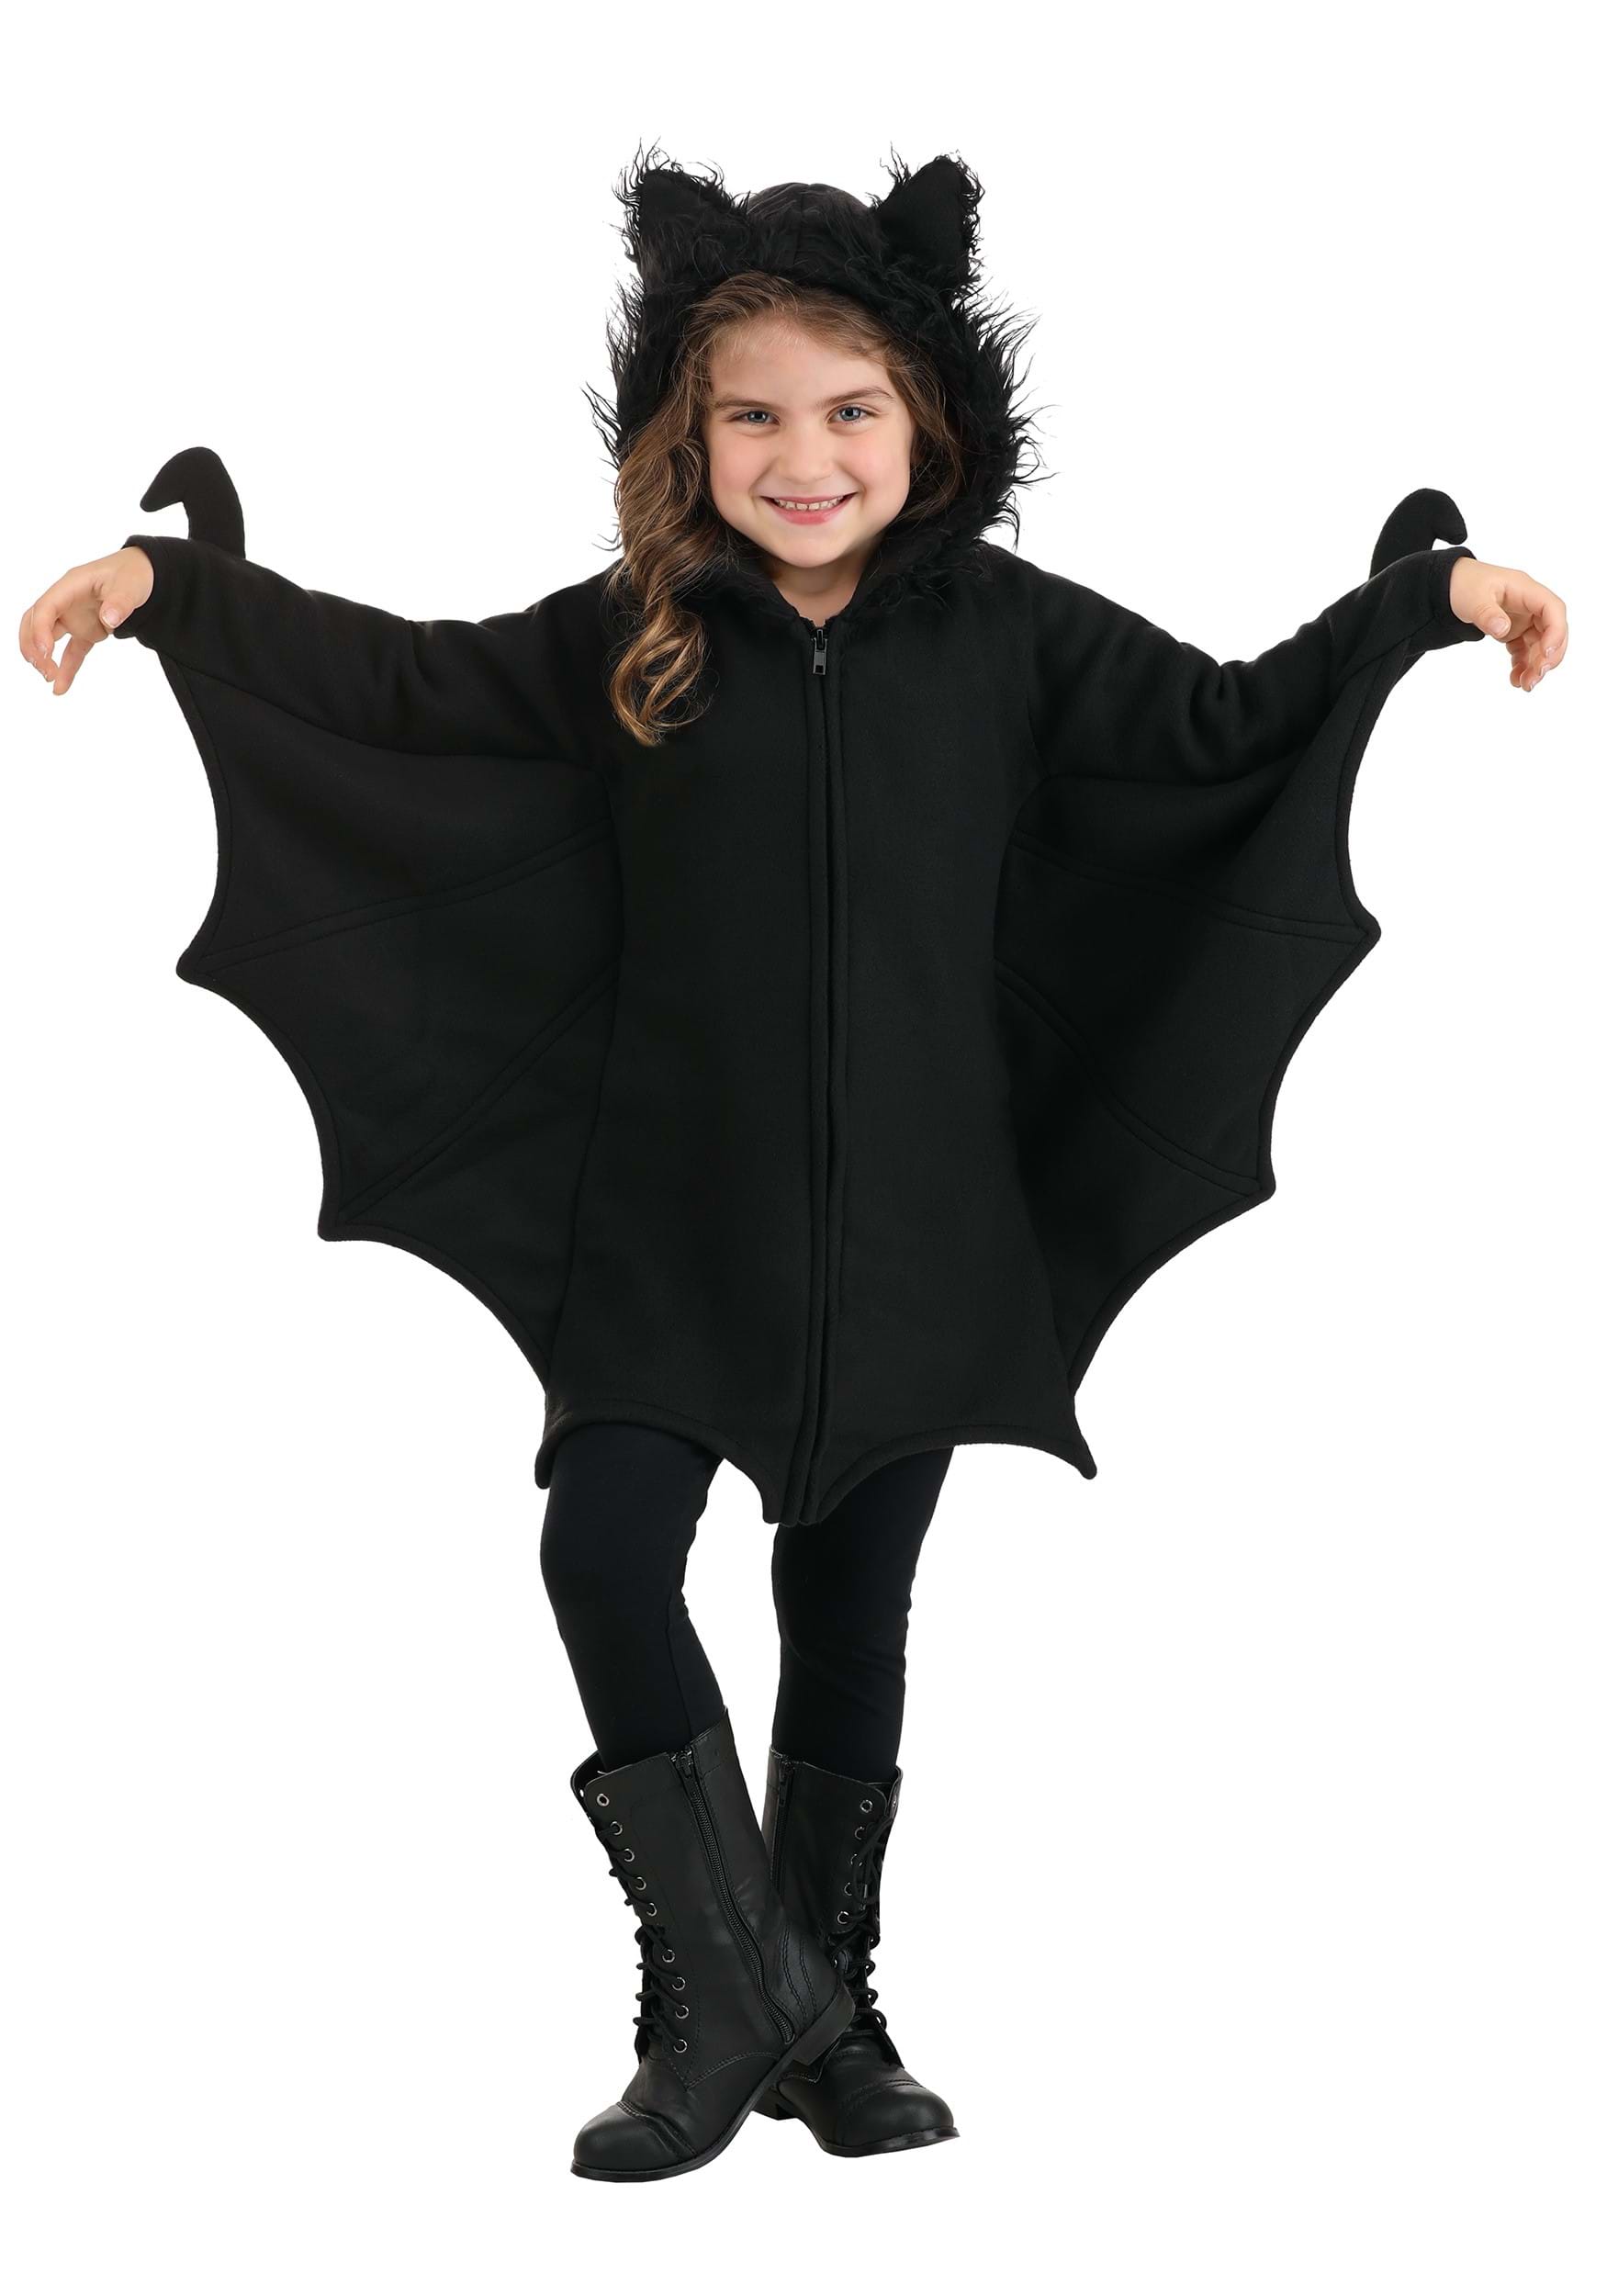 Photos - Fancy Dress MKW Leg Avenue Cozy Black Bat Costume for Girls | Bat Costumes Black LEC49100 